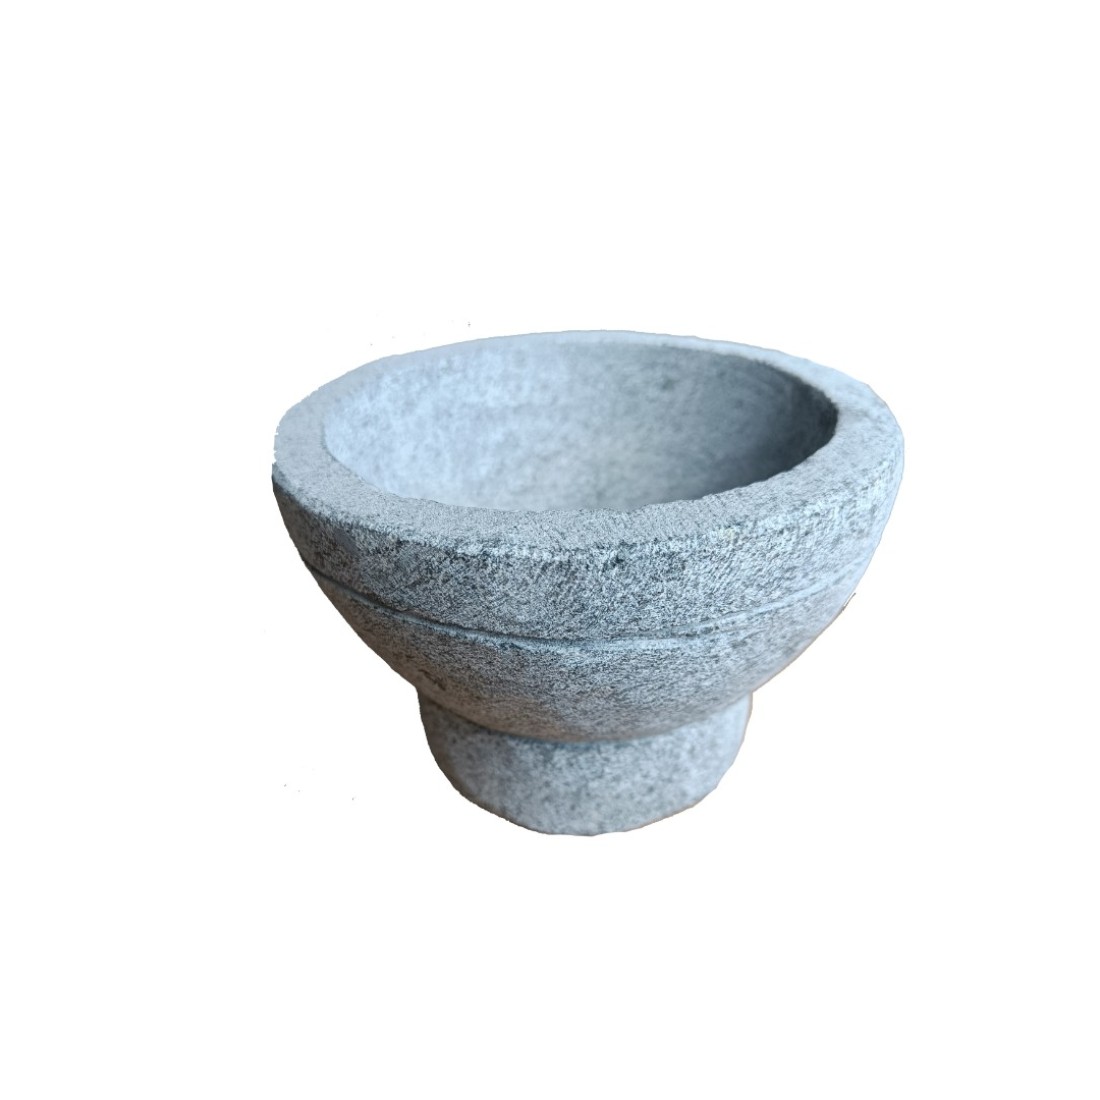 Tillage-Natural Stone Mortar and Pestle Set/Ural/Okhli Masher/idikallu set (size 6 inches) 2